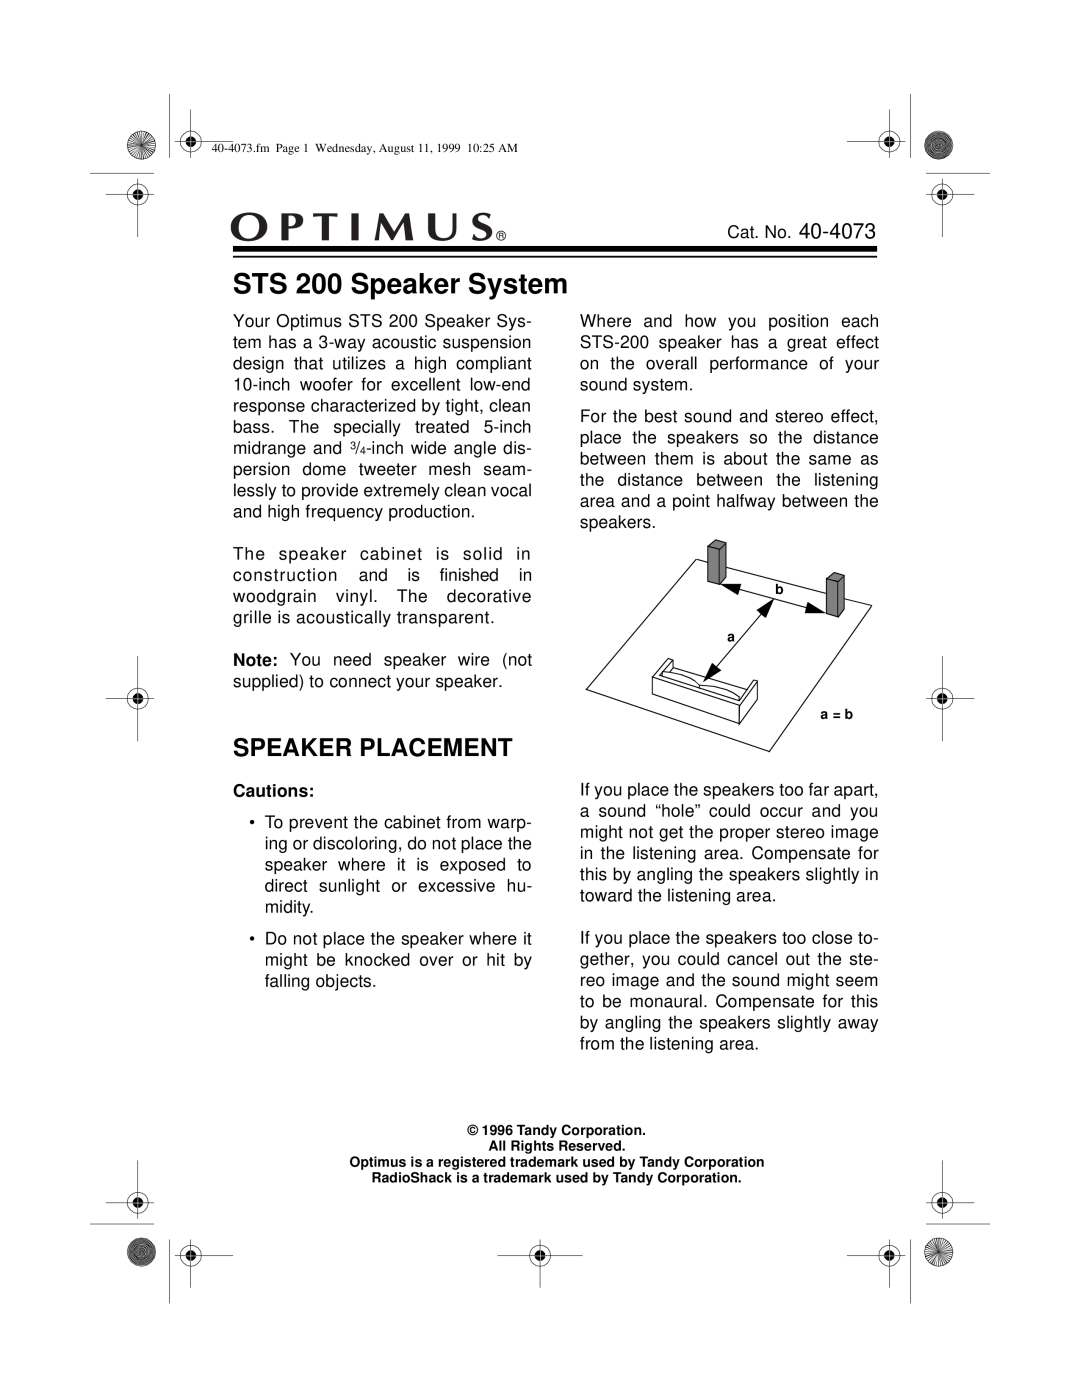 Optimus manual Speaker Placement, Cautions, STS 200 Speaker System 